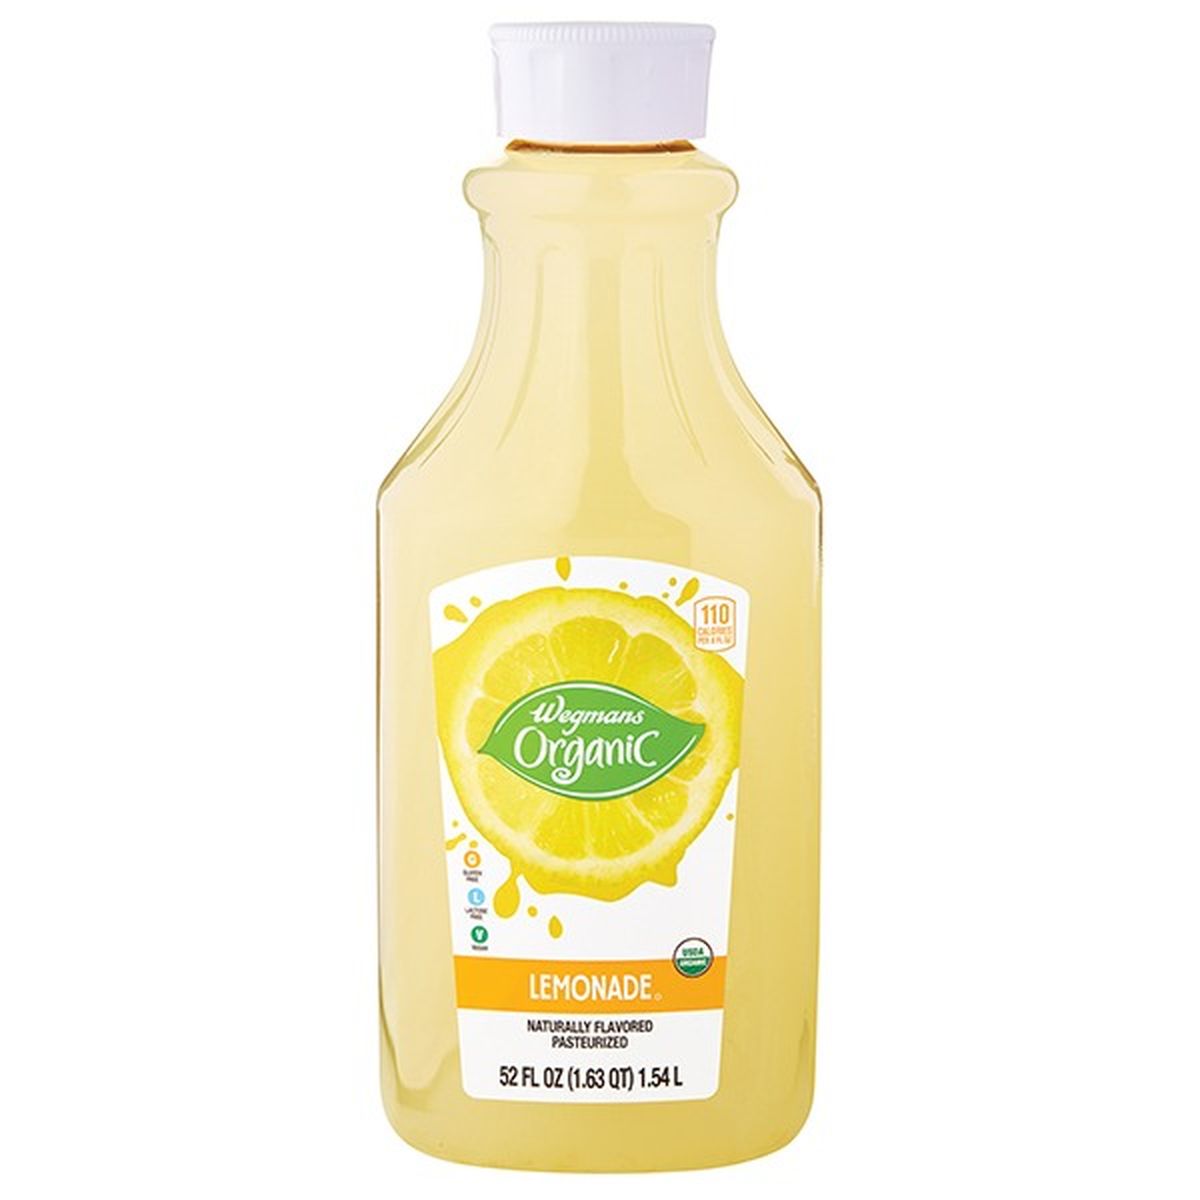 Calories in Wegmans Organic Lemonade